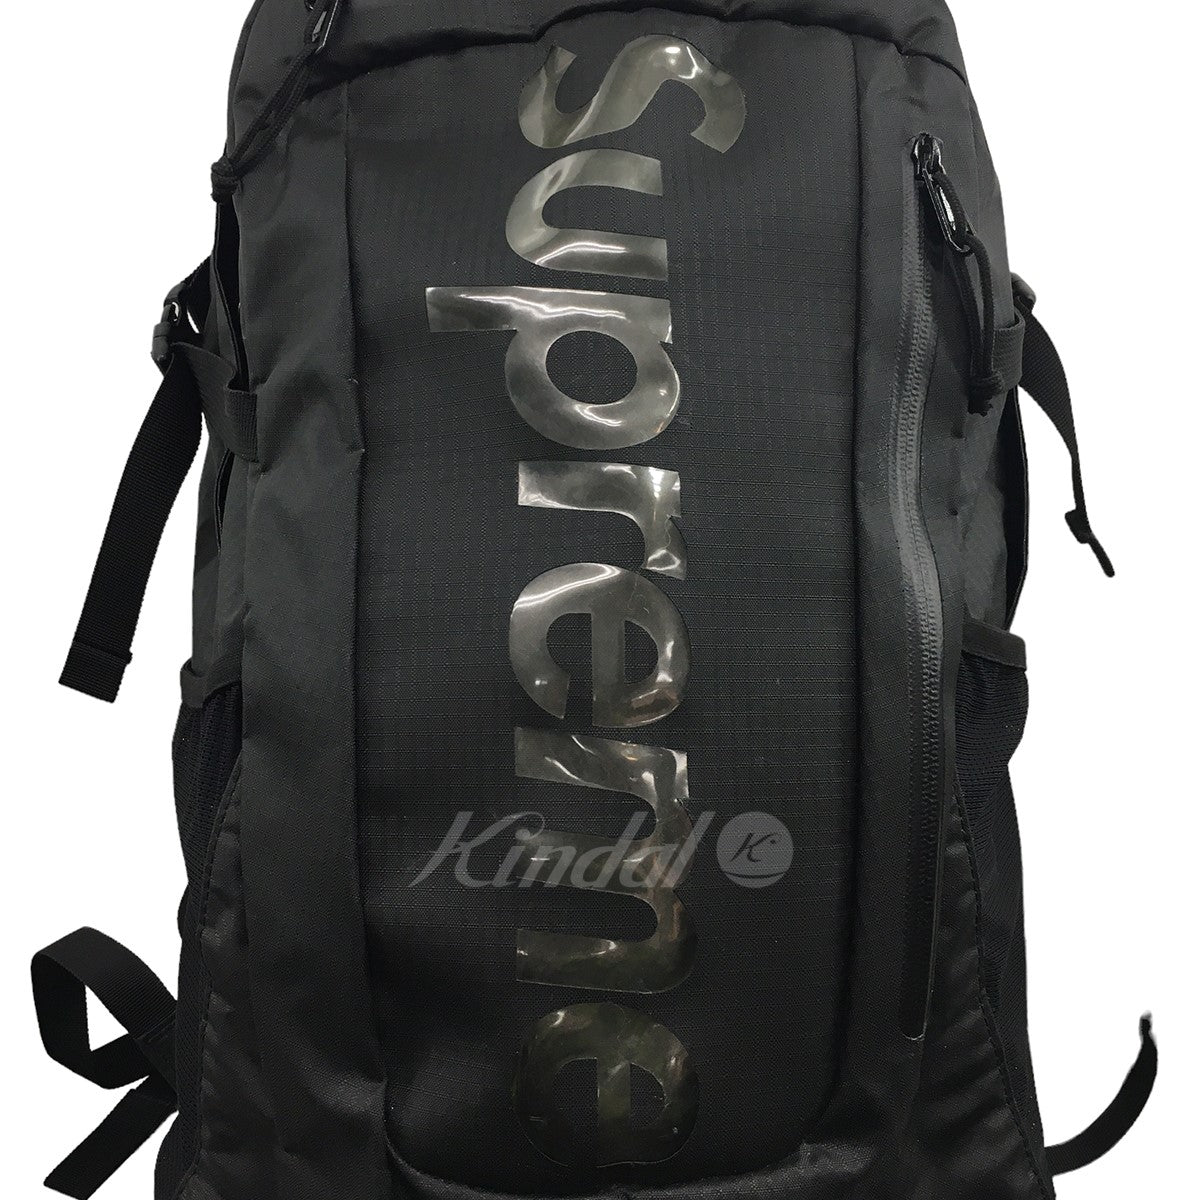 SUPREME(シュプリーム) 21SS Backpack ロゴ バックパック ブラック サイズ 12｜【公式】カインドオルオンライン  ブランド古着・中古通販【kindal】